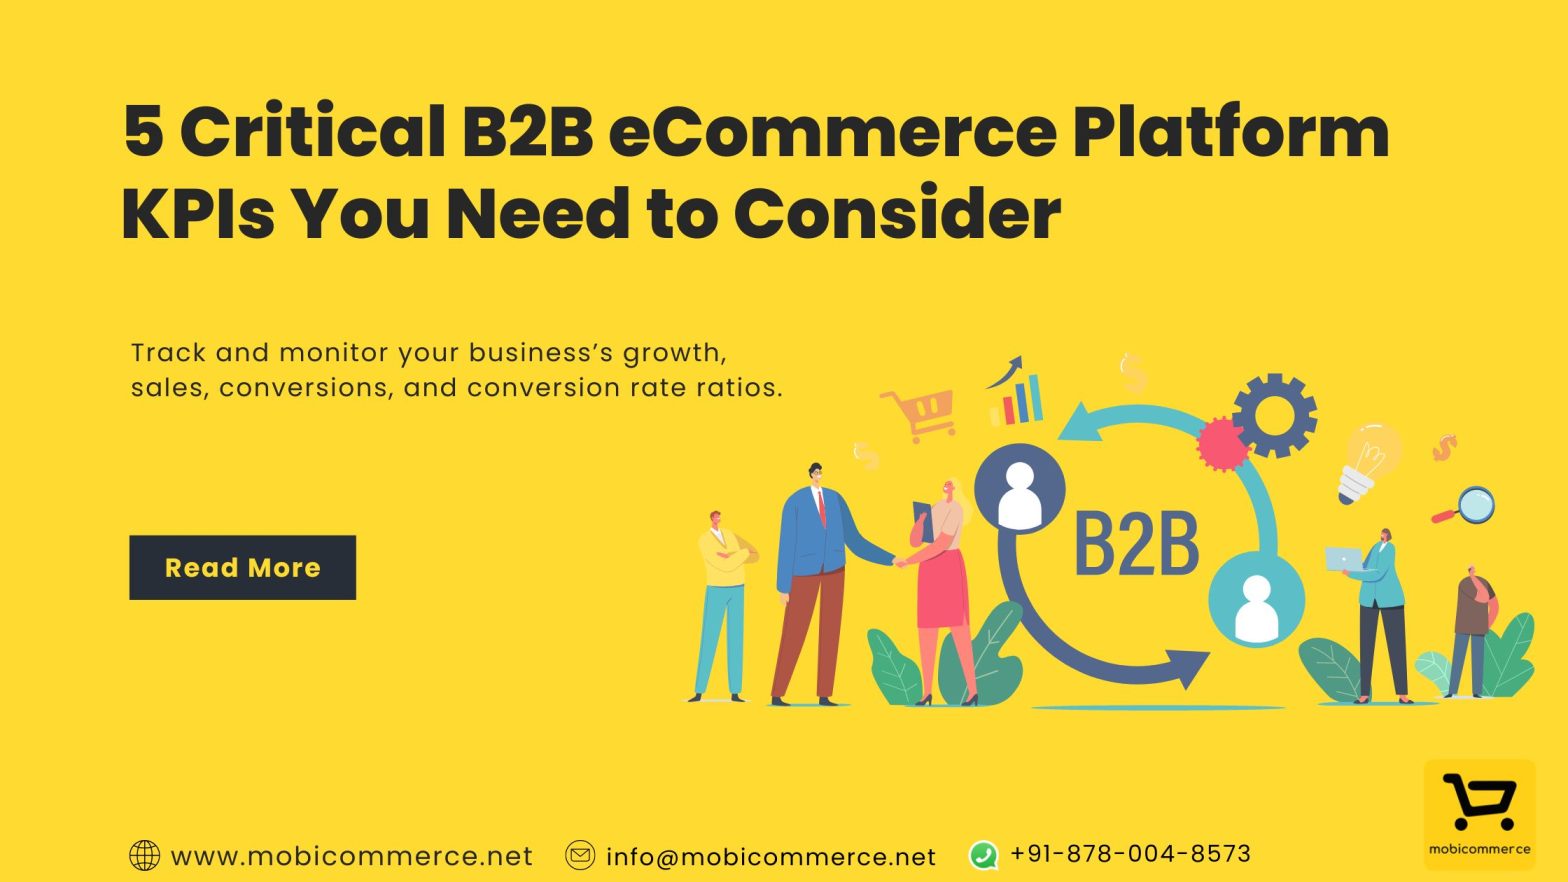 B2B eCommerce Platform KPIs